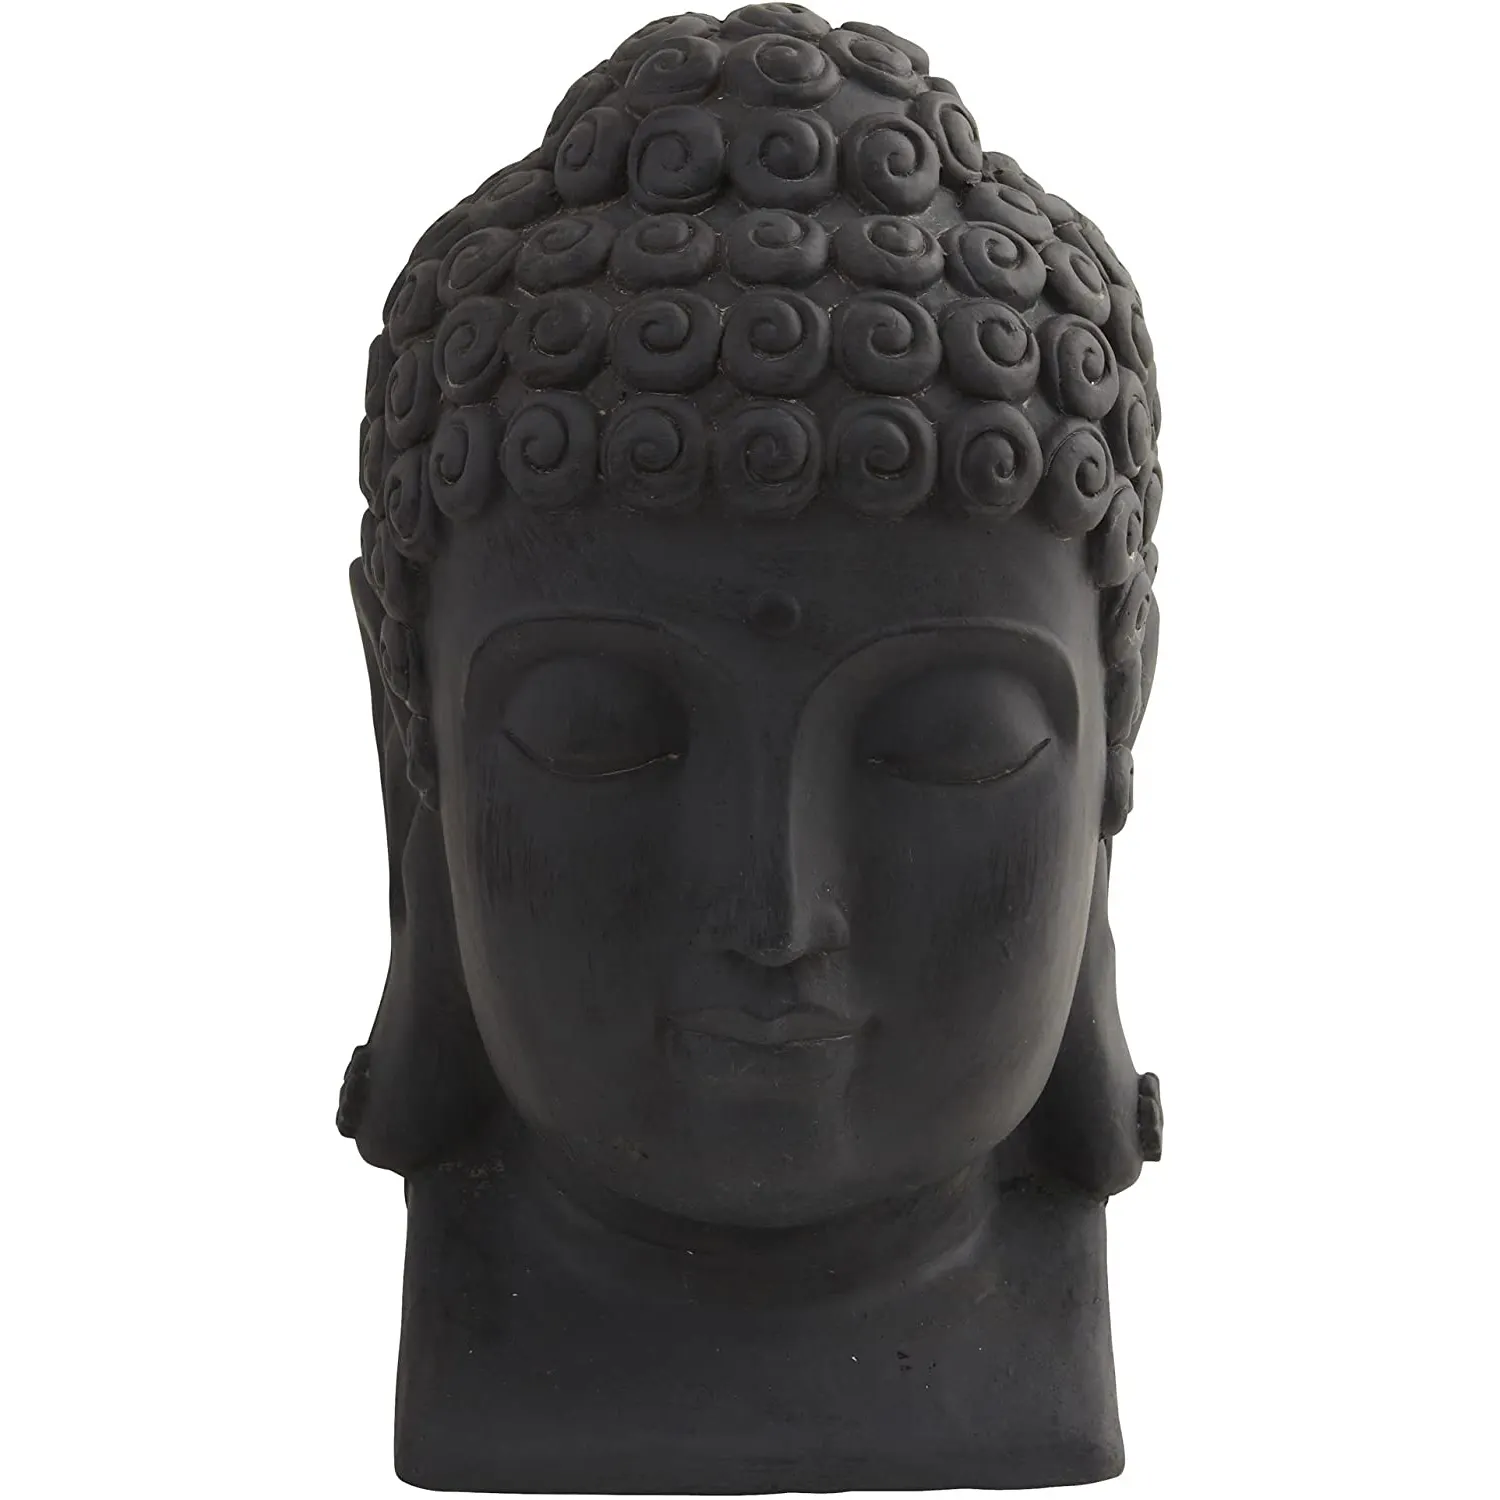 Patung Kepala Buddha Patung Buddha Keberuntungan Patung Resin Cocok untuk Dekorasi Religius dan Rumah